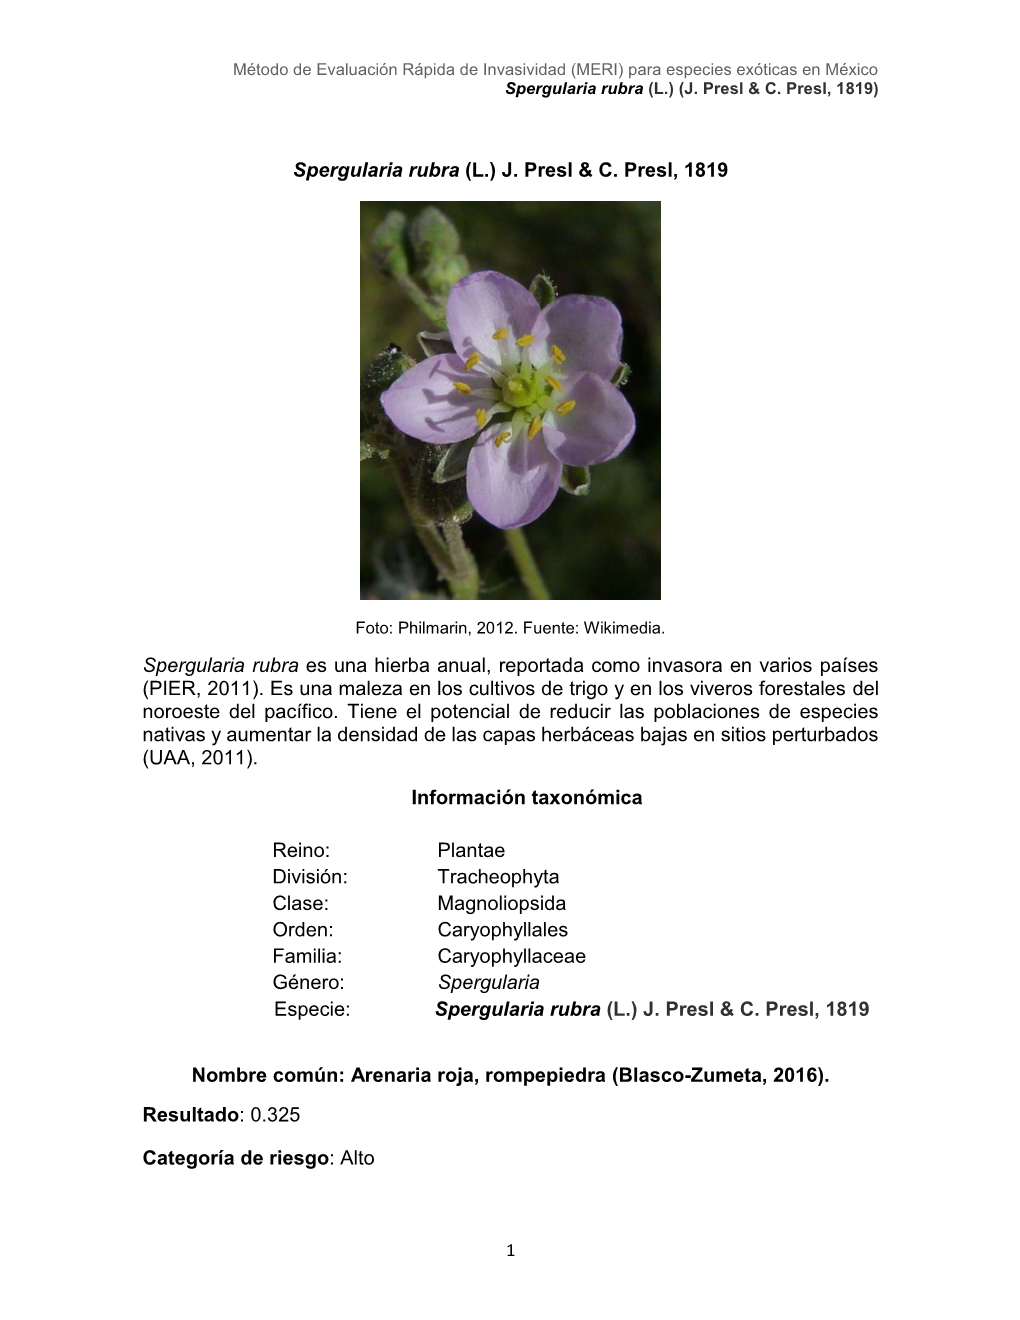 Spergularia Rubra (L.) J. Presl & C. Presl, 1819 Spergularia Rubra Es